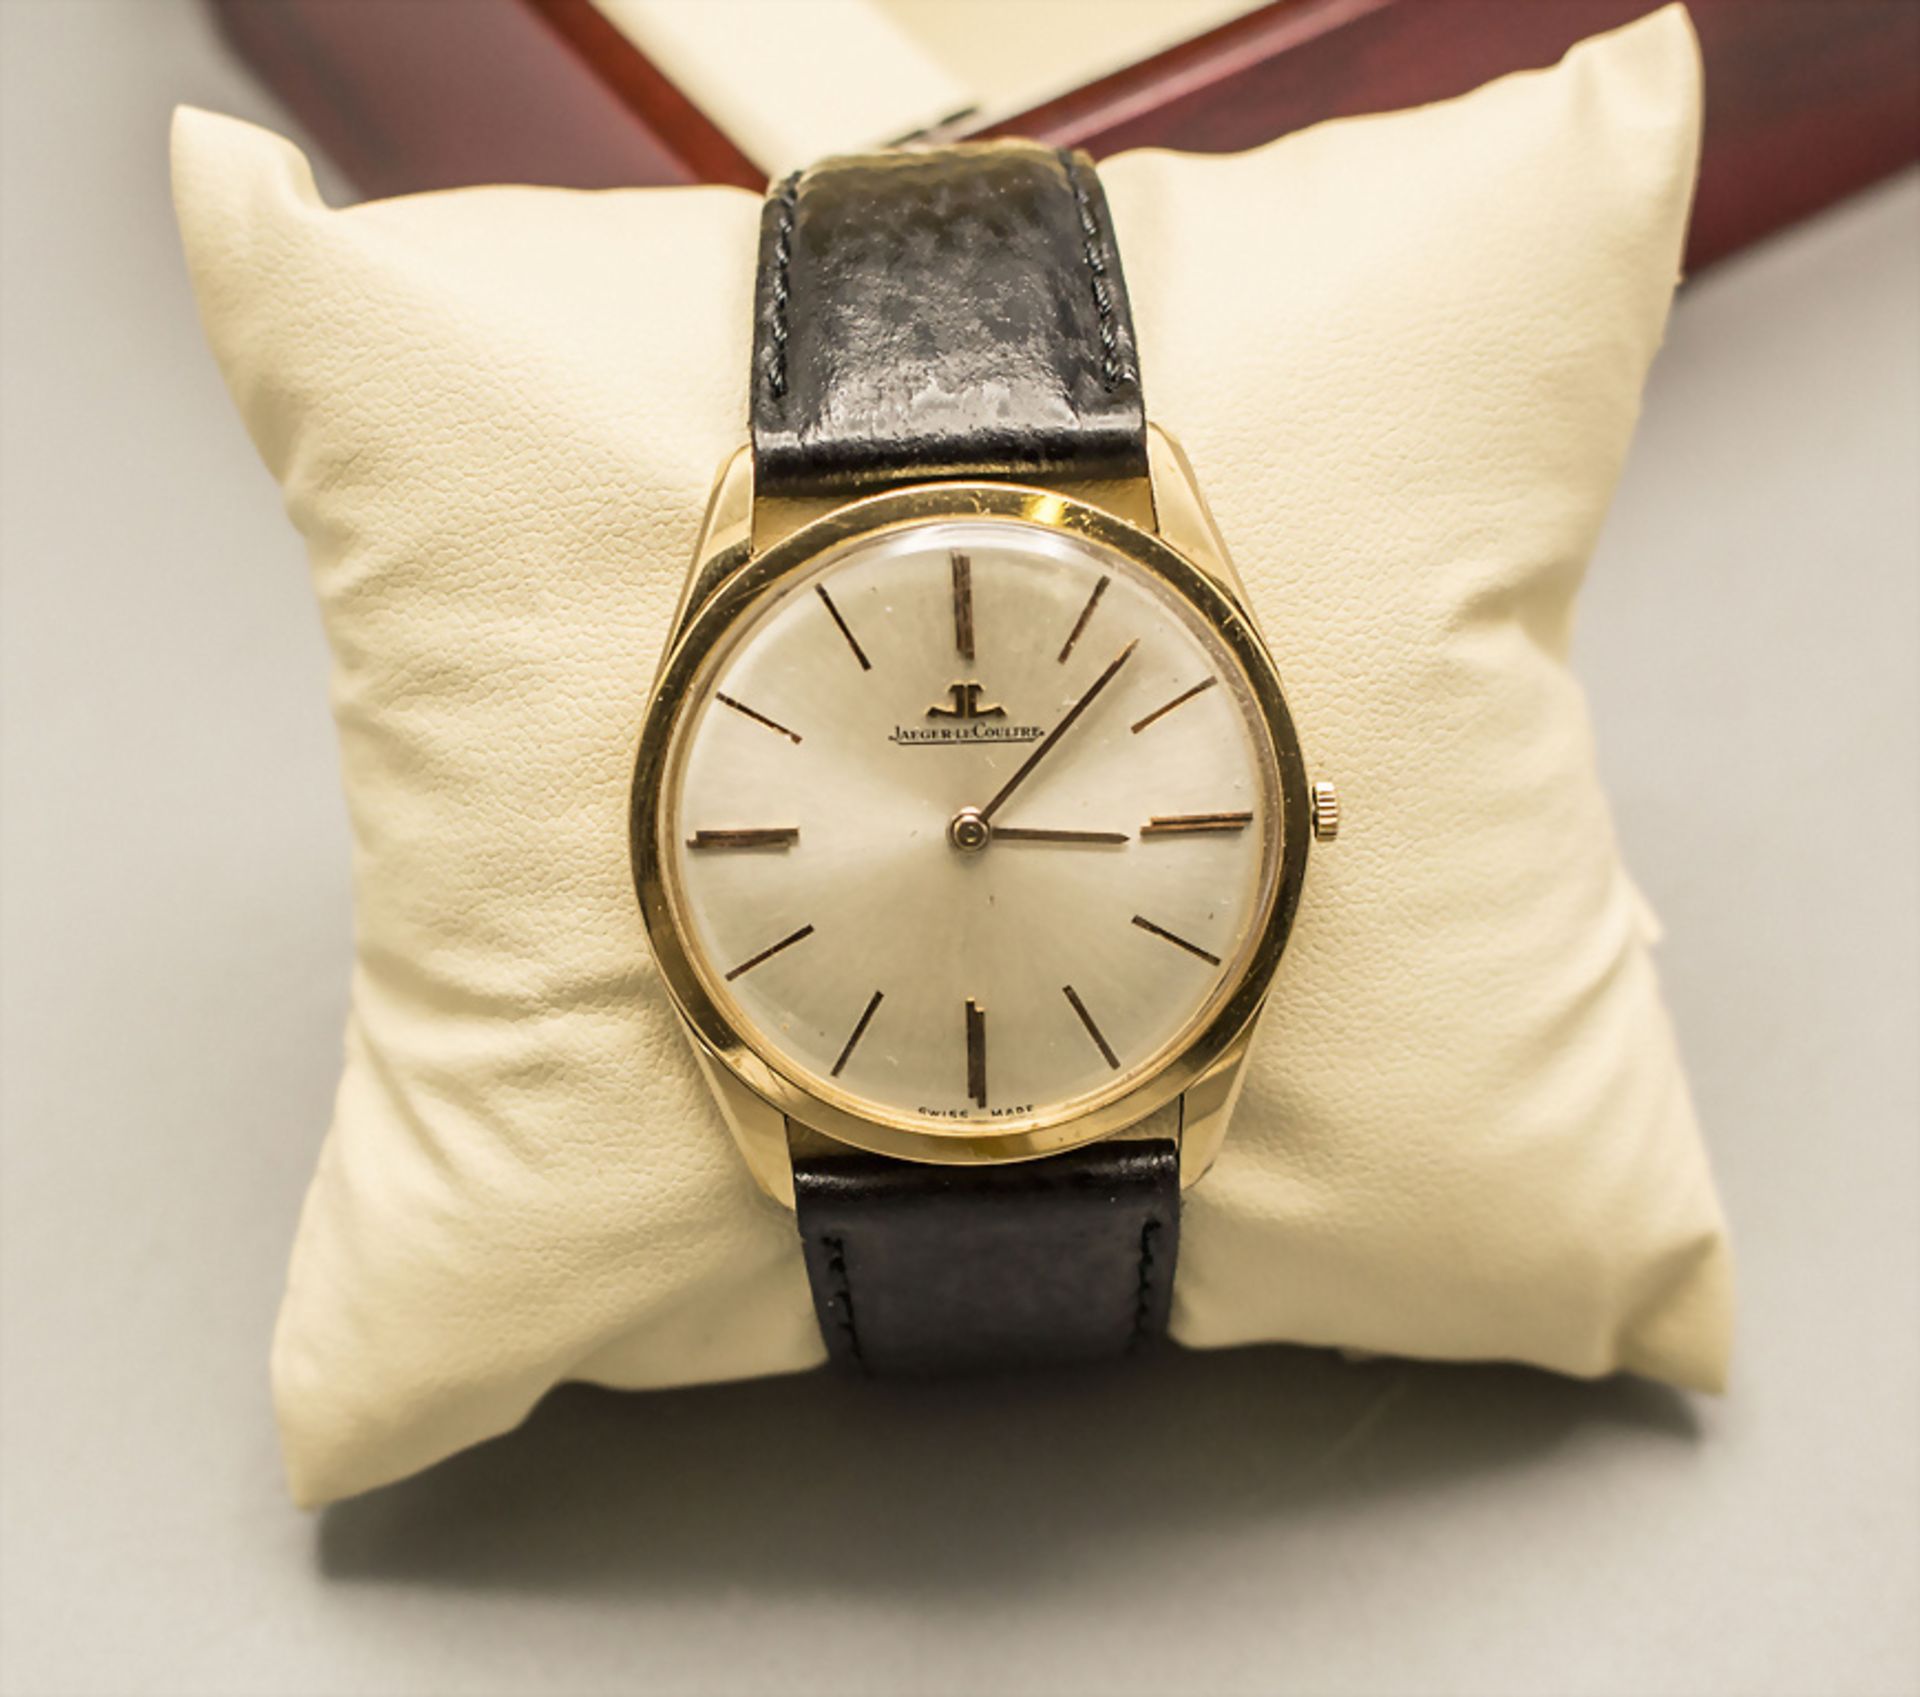 HAU Jäger Le Coultre, Handaufzug / A men's wrist watch, Schweiz / Swiss, 60er/70er Jahre - Image 2 of 4